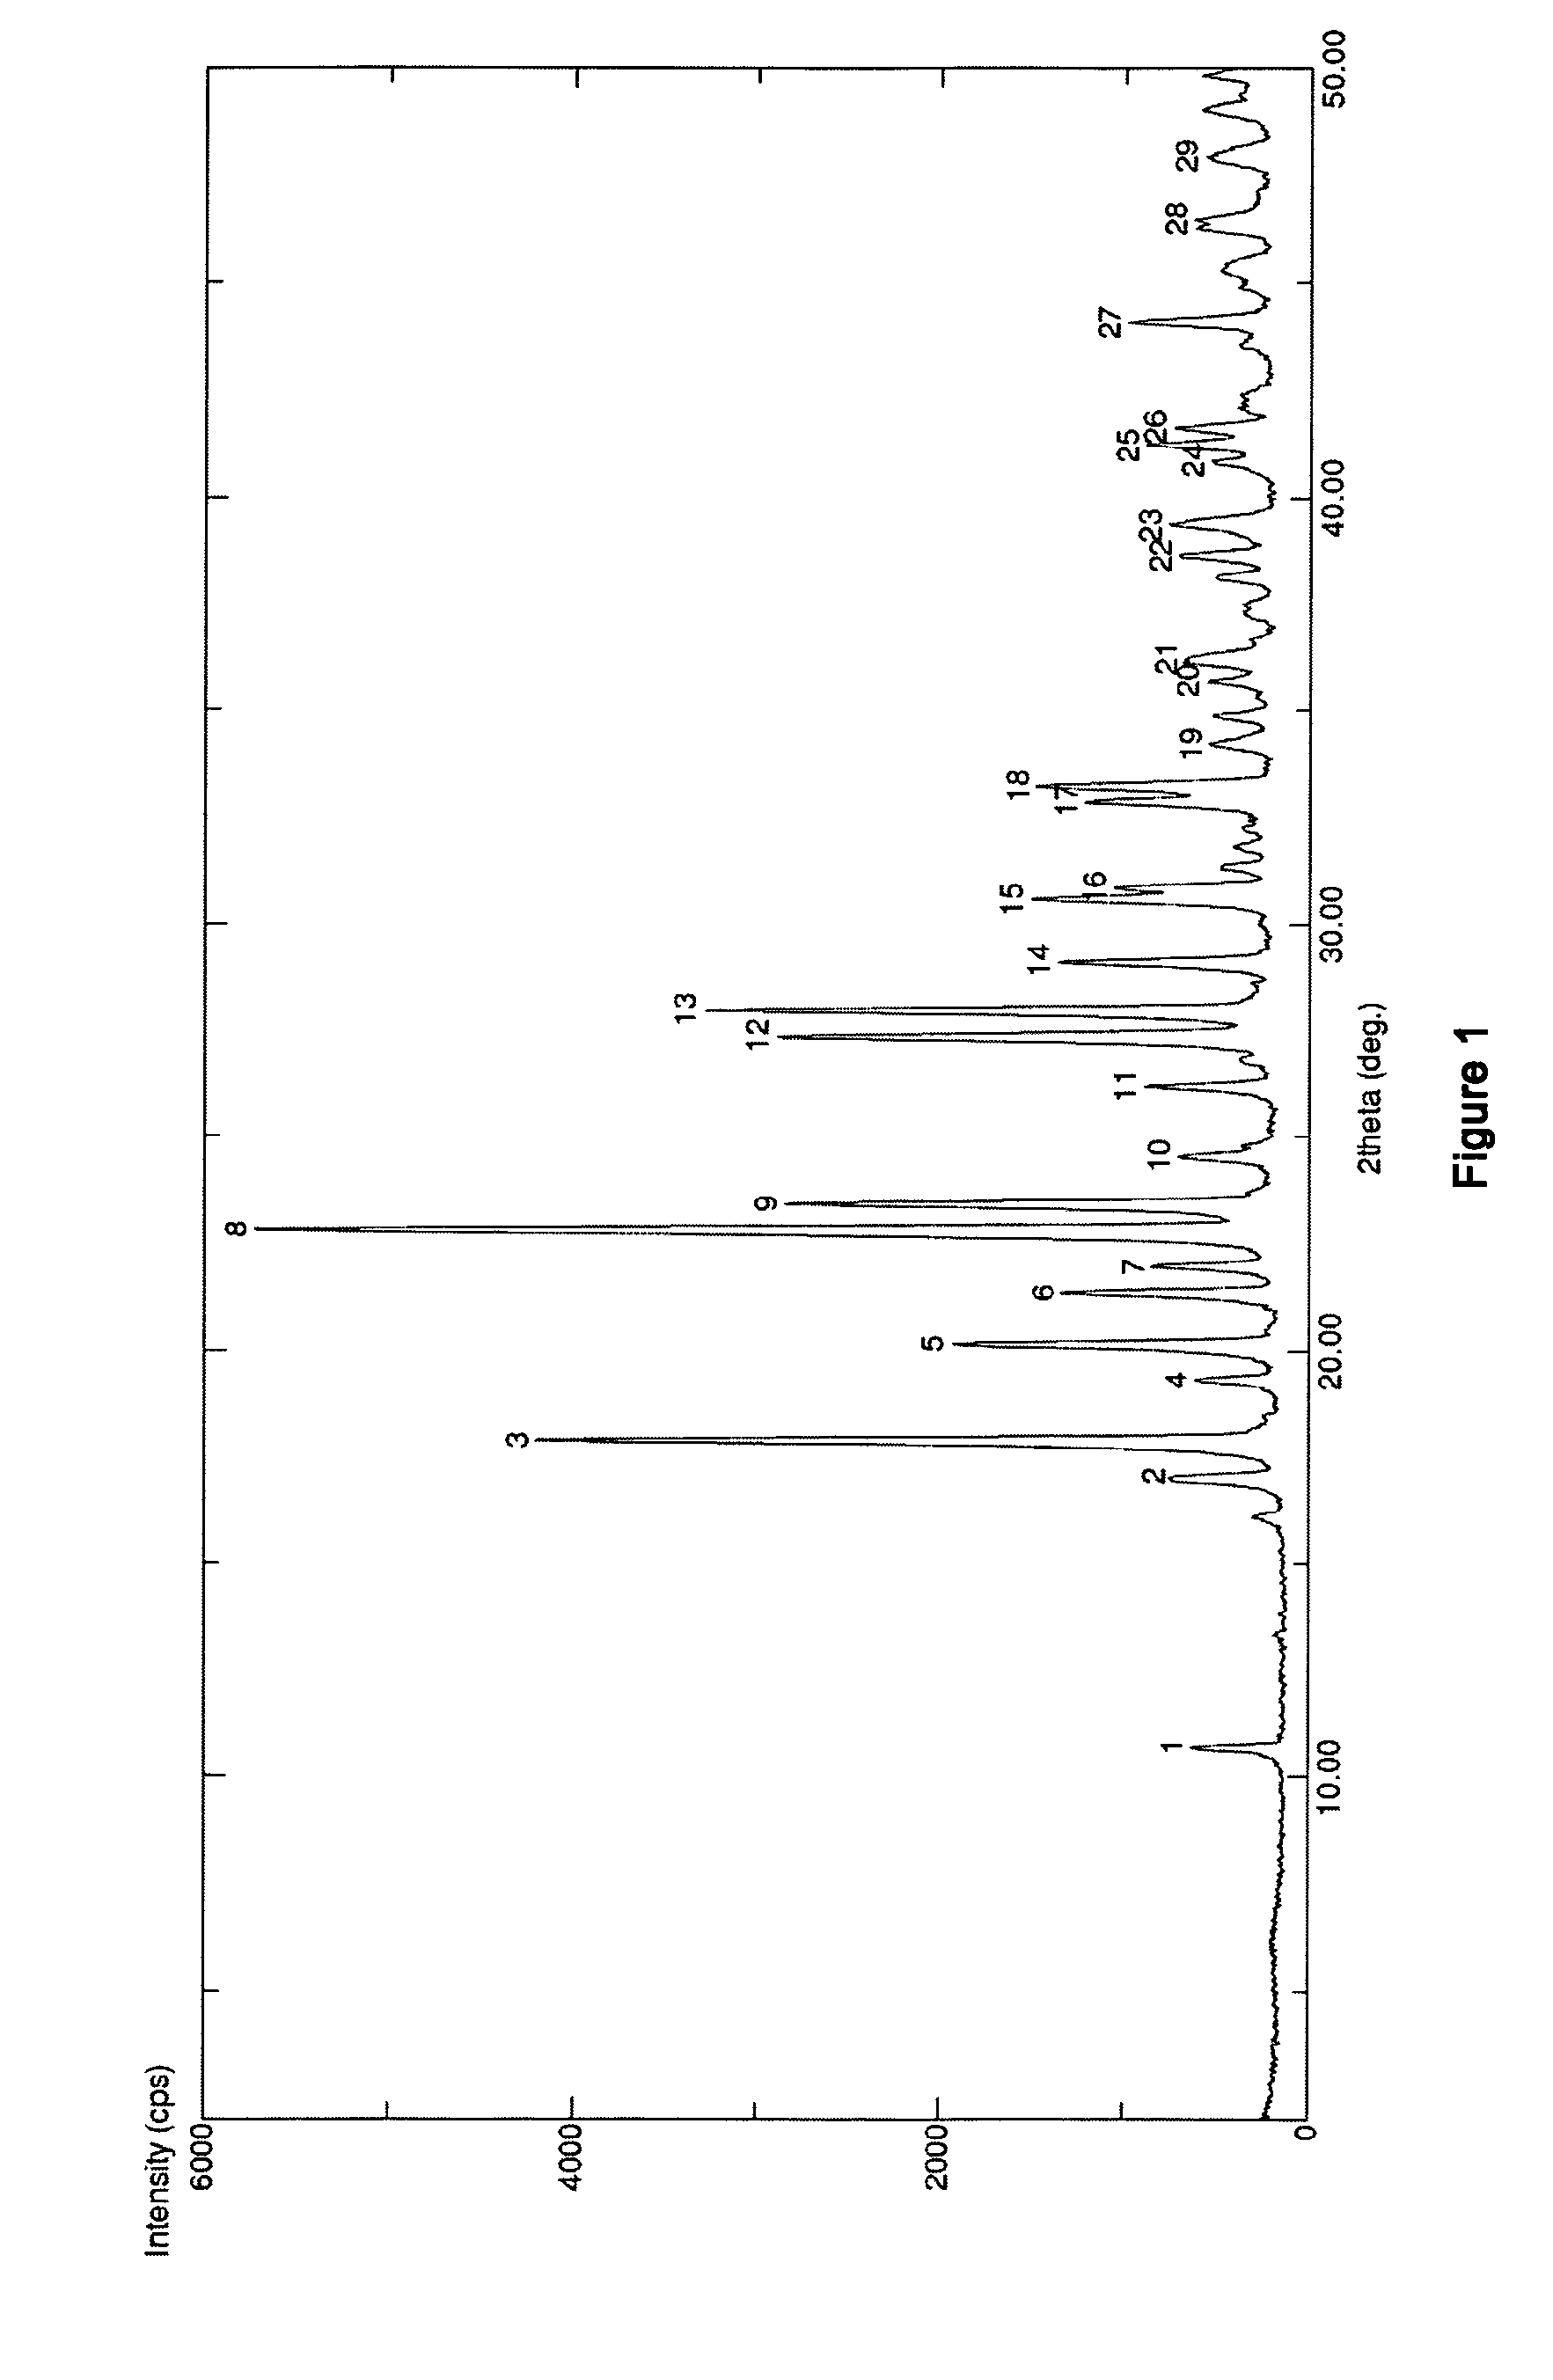 Polymorphs of enantiopure erdosteine